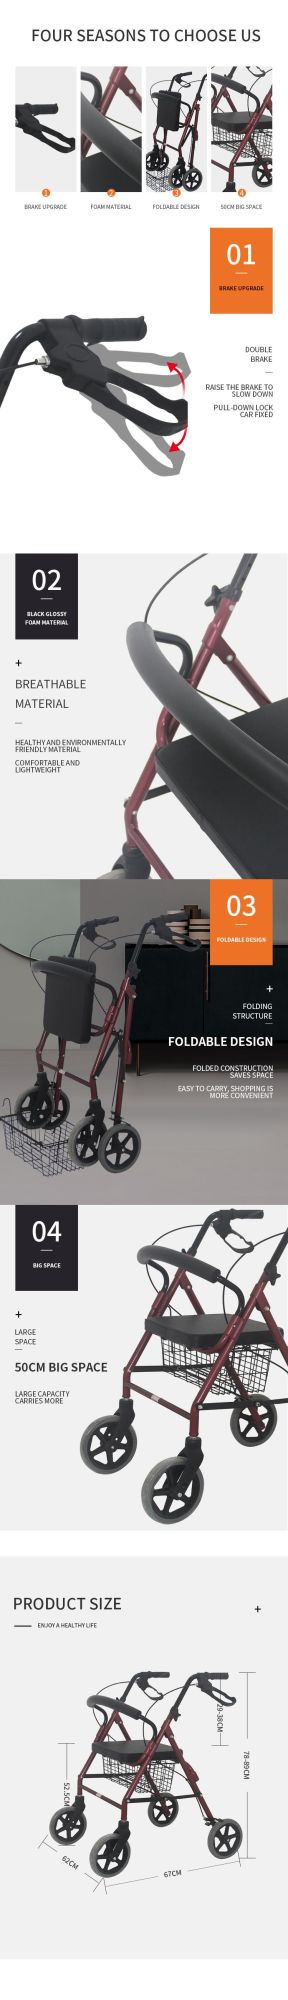 Lightweight Mobility 4 Wheeled Elderly Walker Rollator with Seat Aluminum Walking Aid Frame